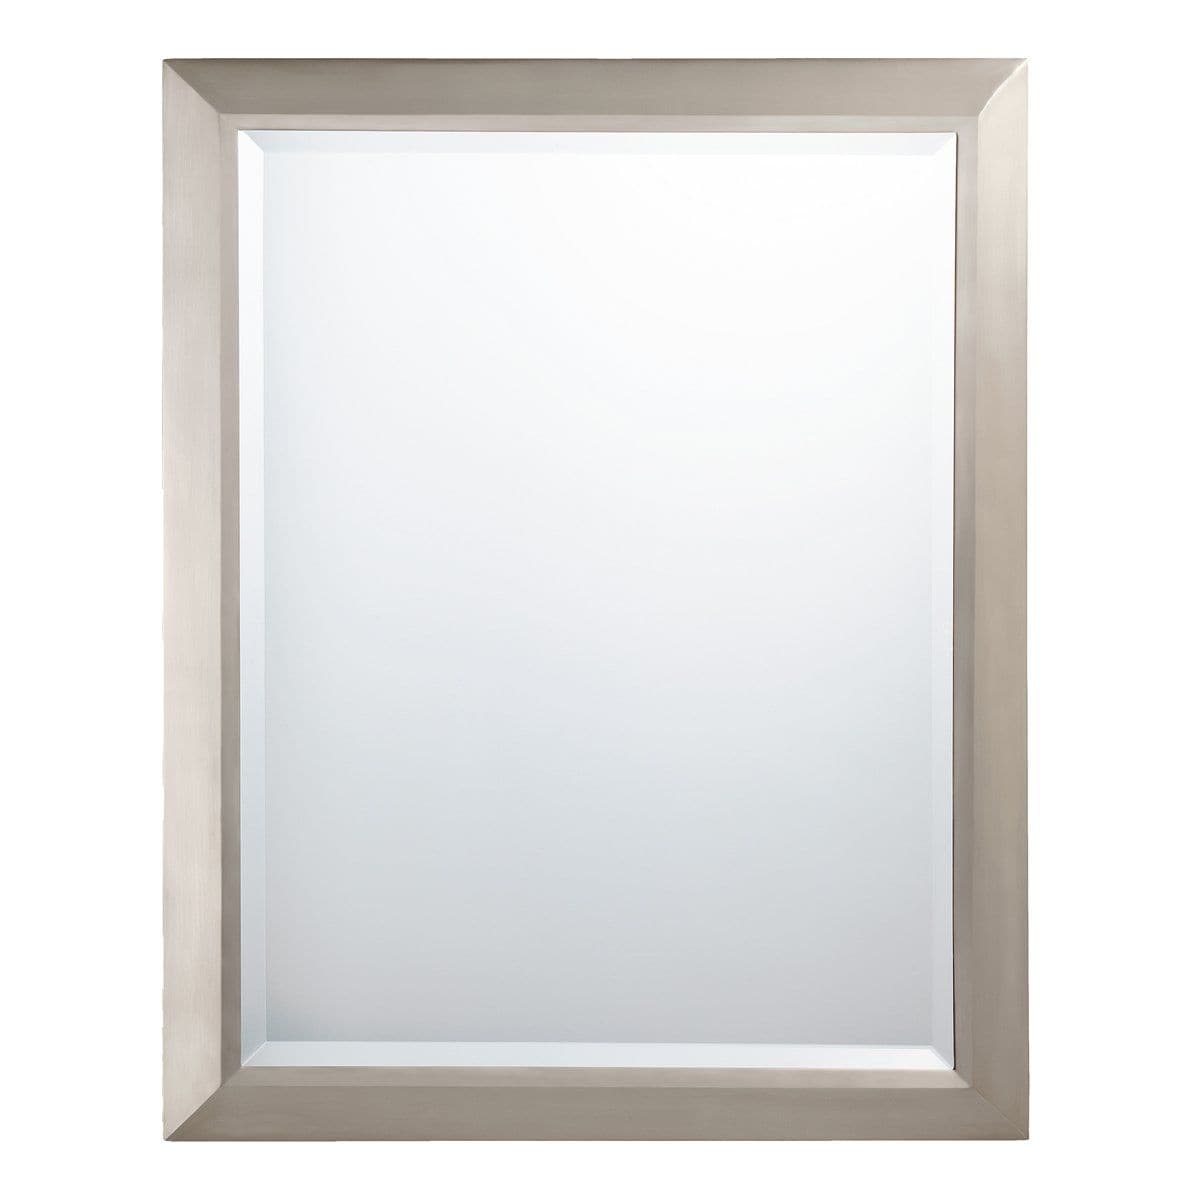 Kichler 24-in x 30-in Framed Bathroom Vanity Mirror (Brushed Nickel) in ...